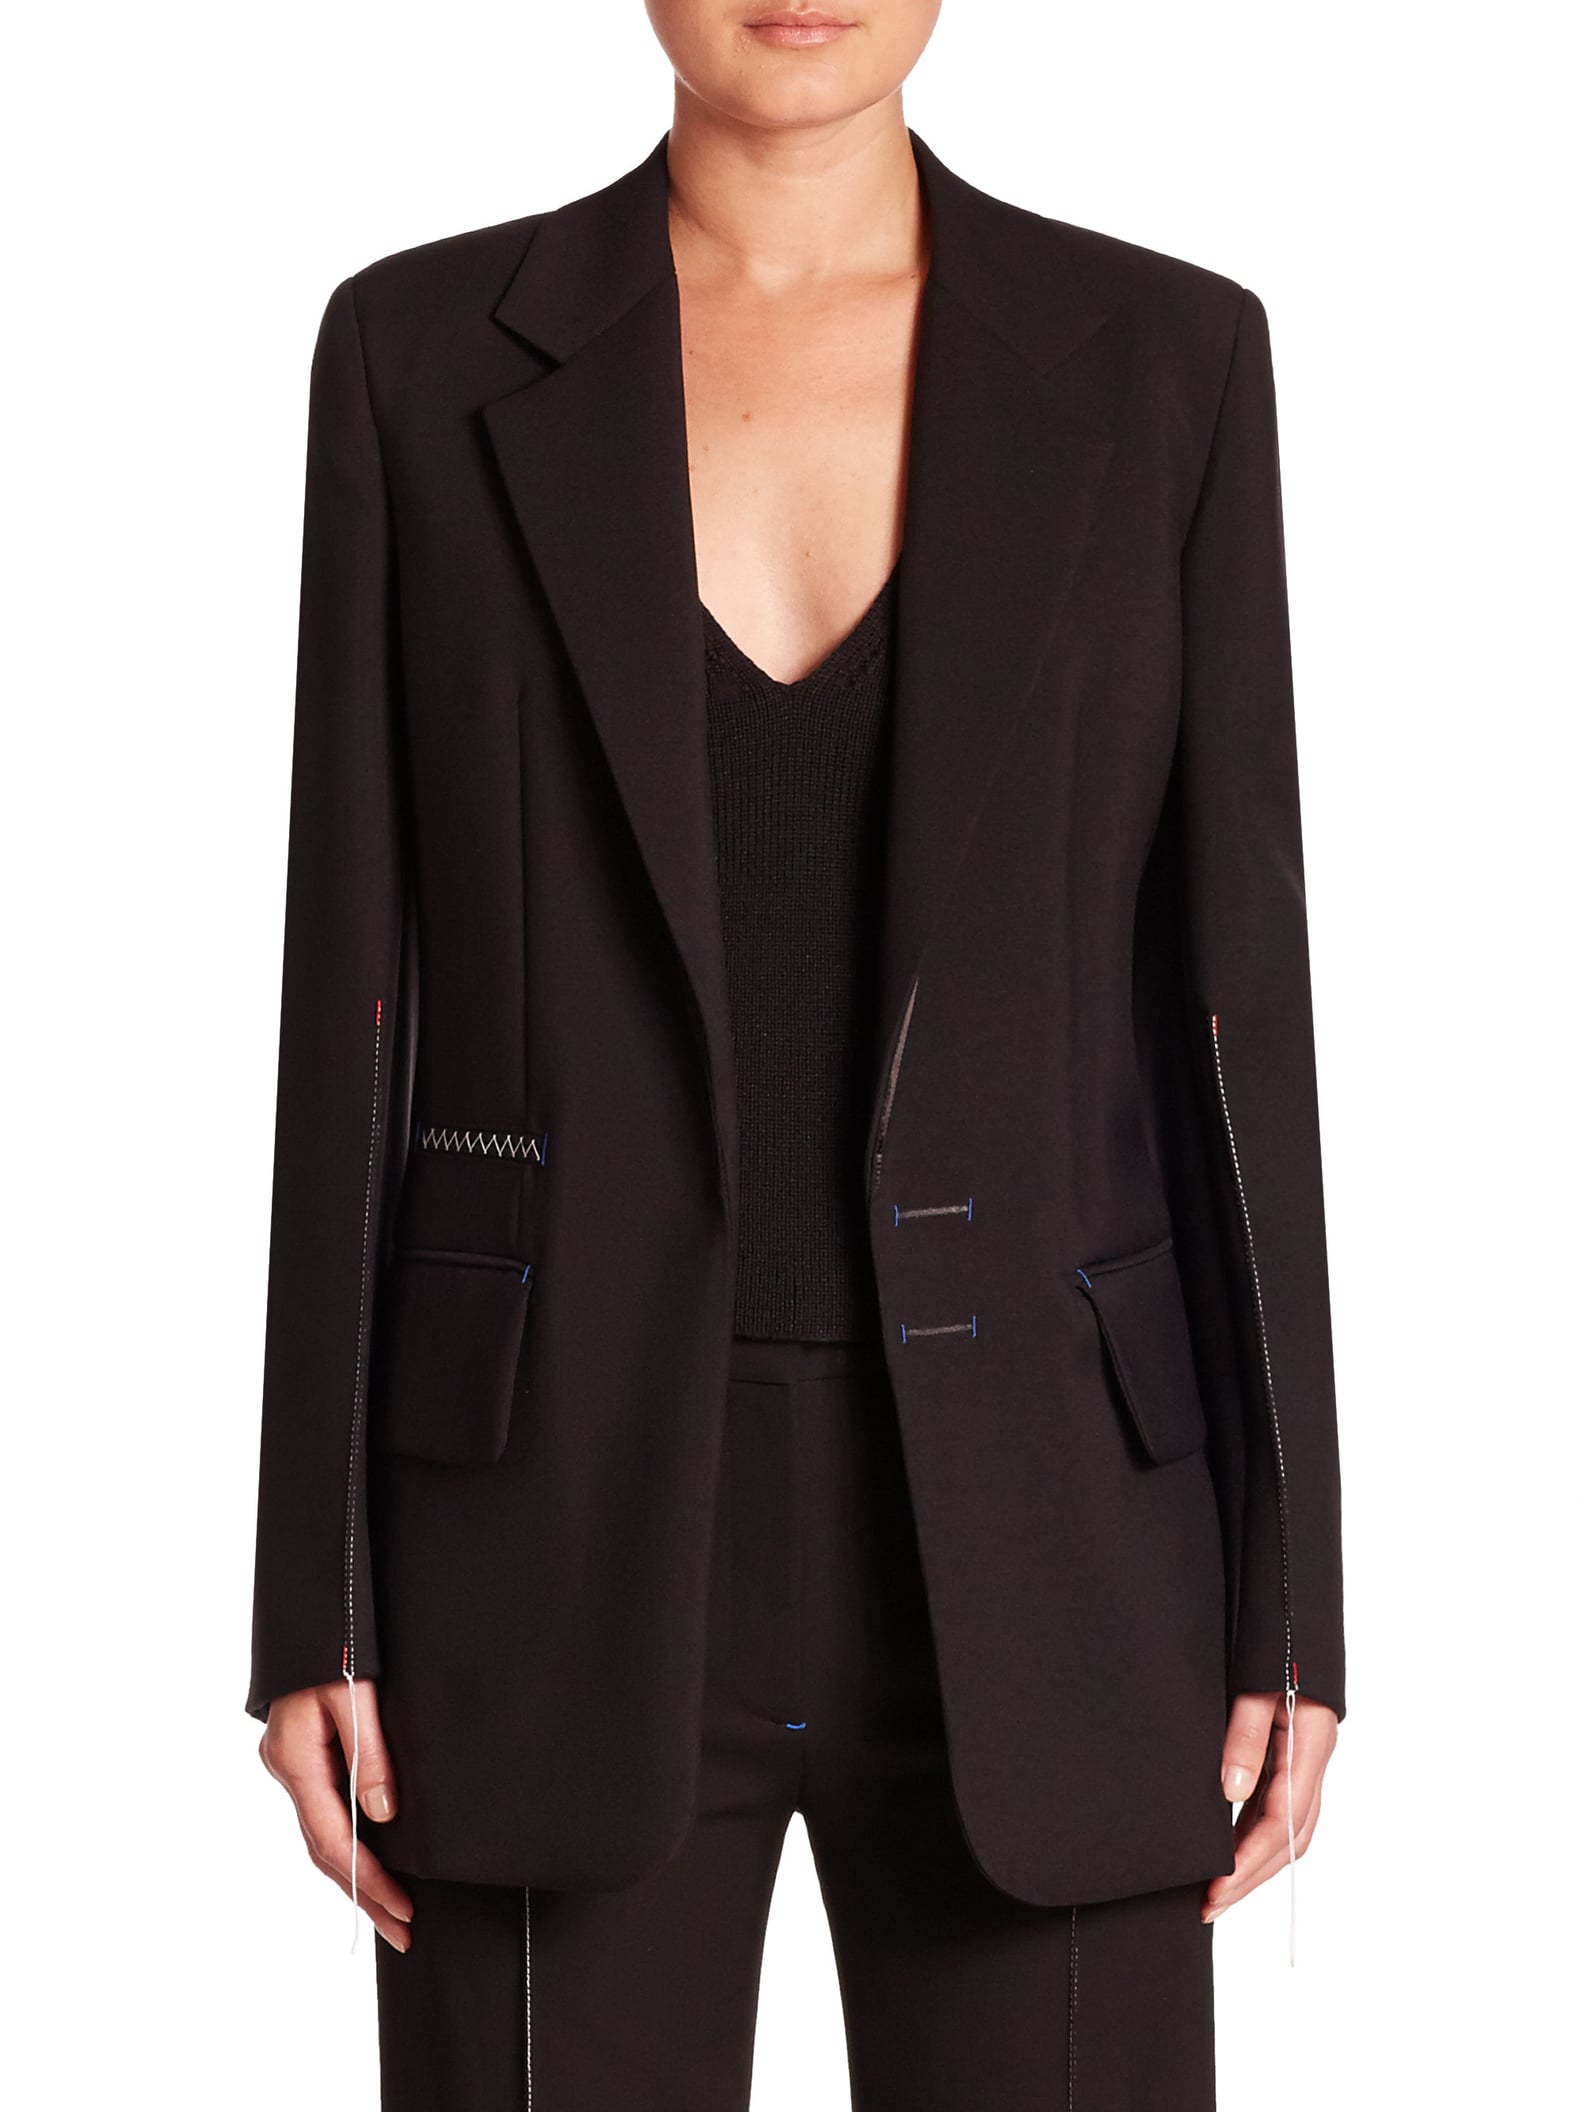 Melania Trump's Black Escada Blazer | POPSUGAR Fashion